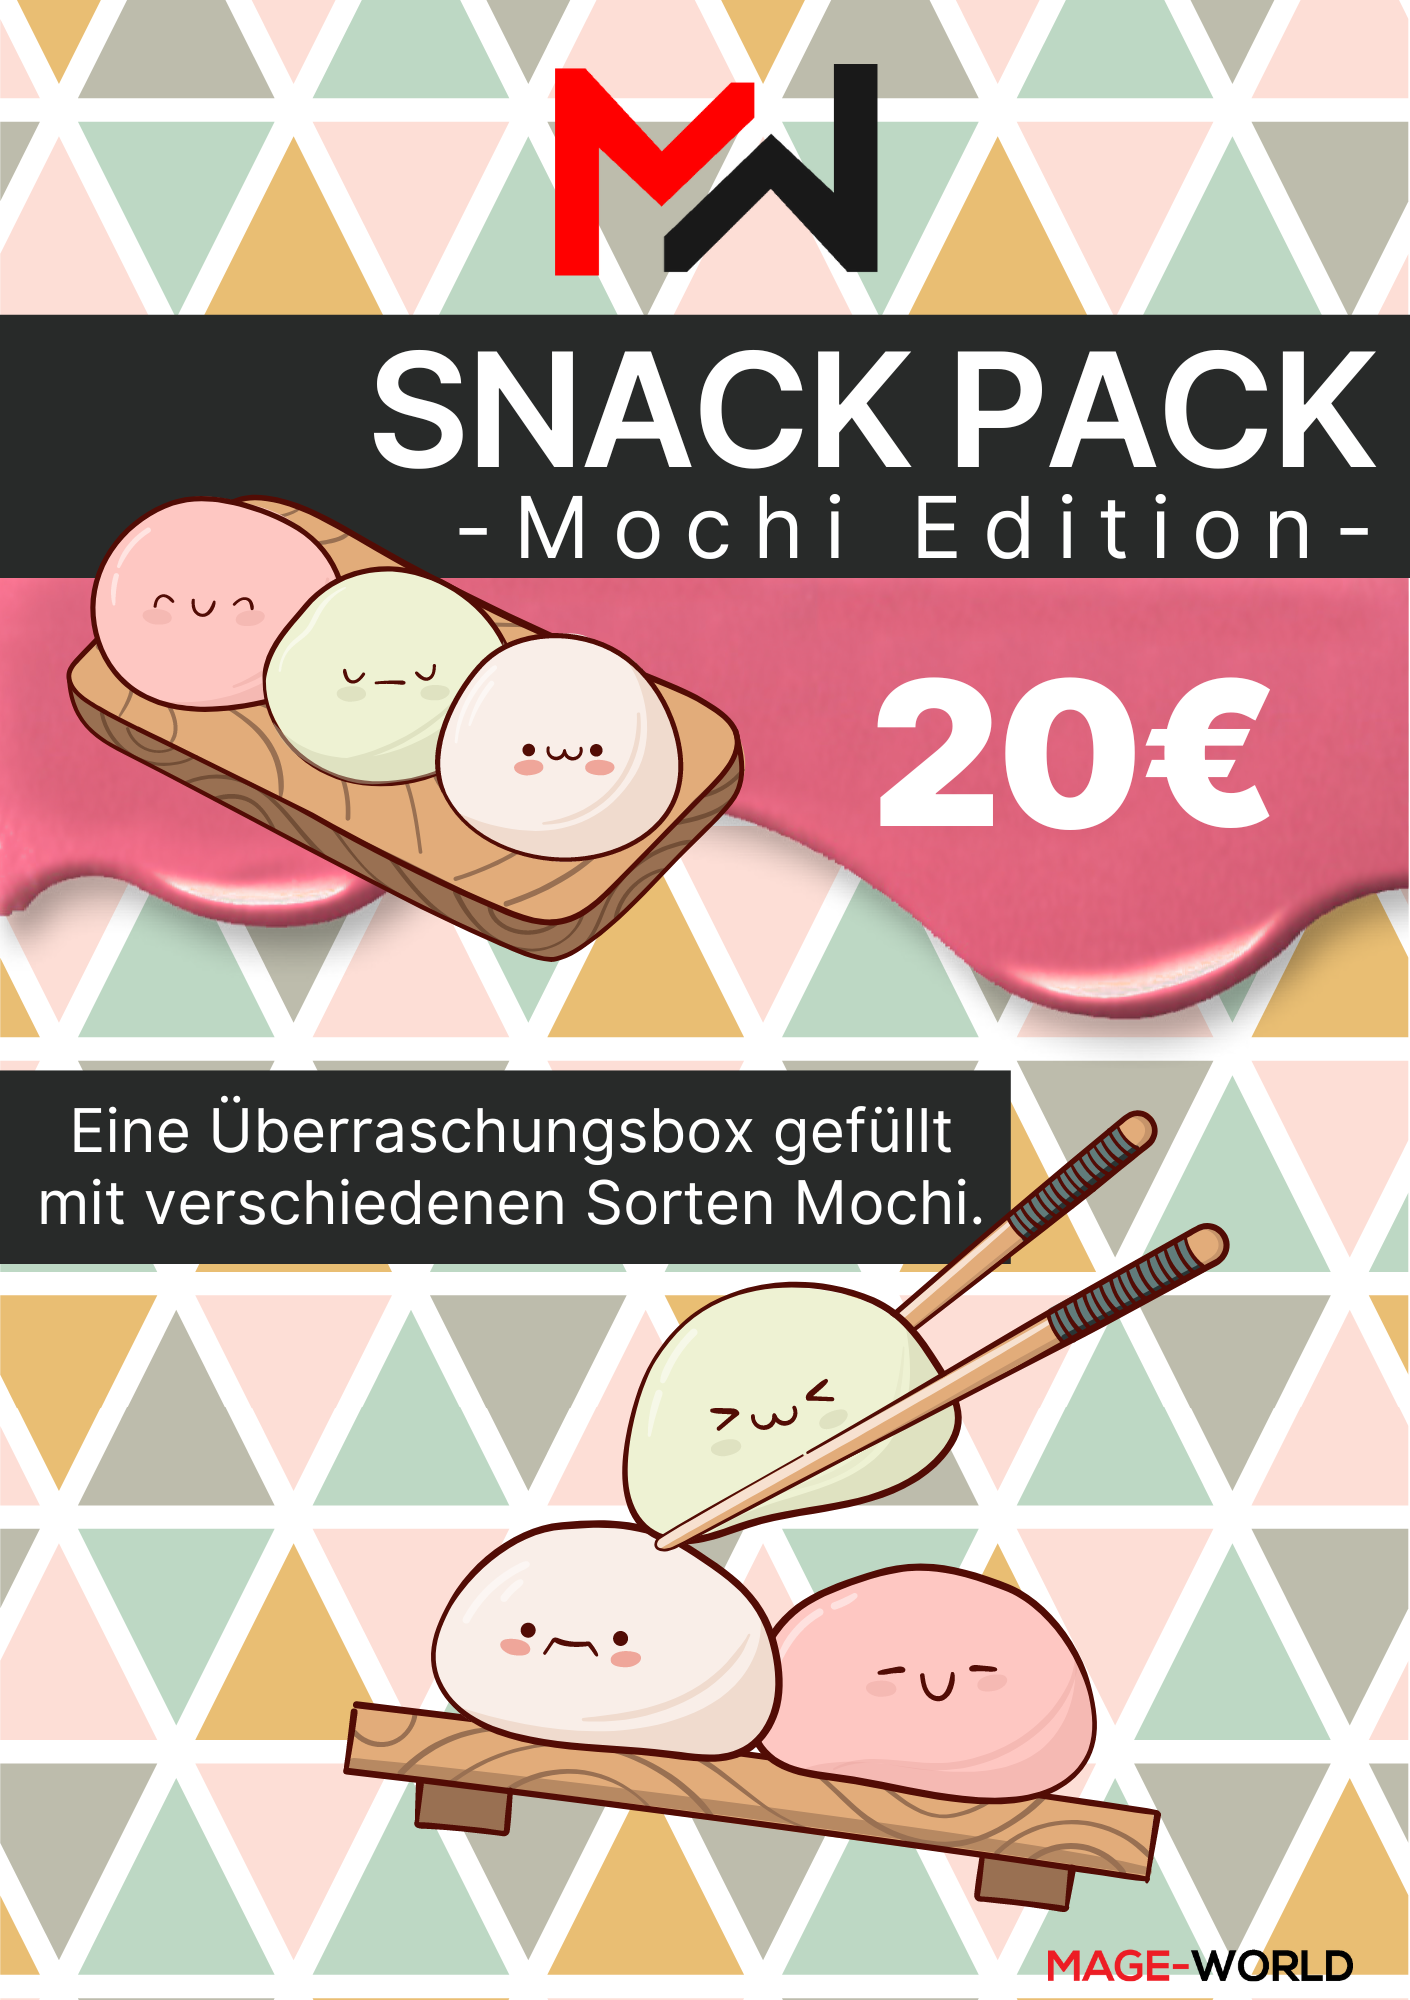 Mochi Snack Pack surprise box